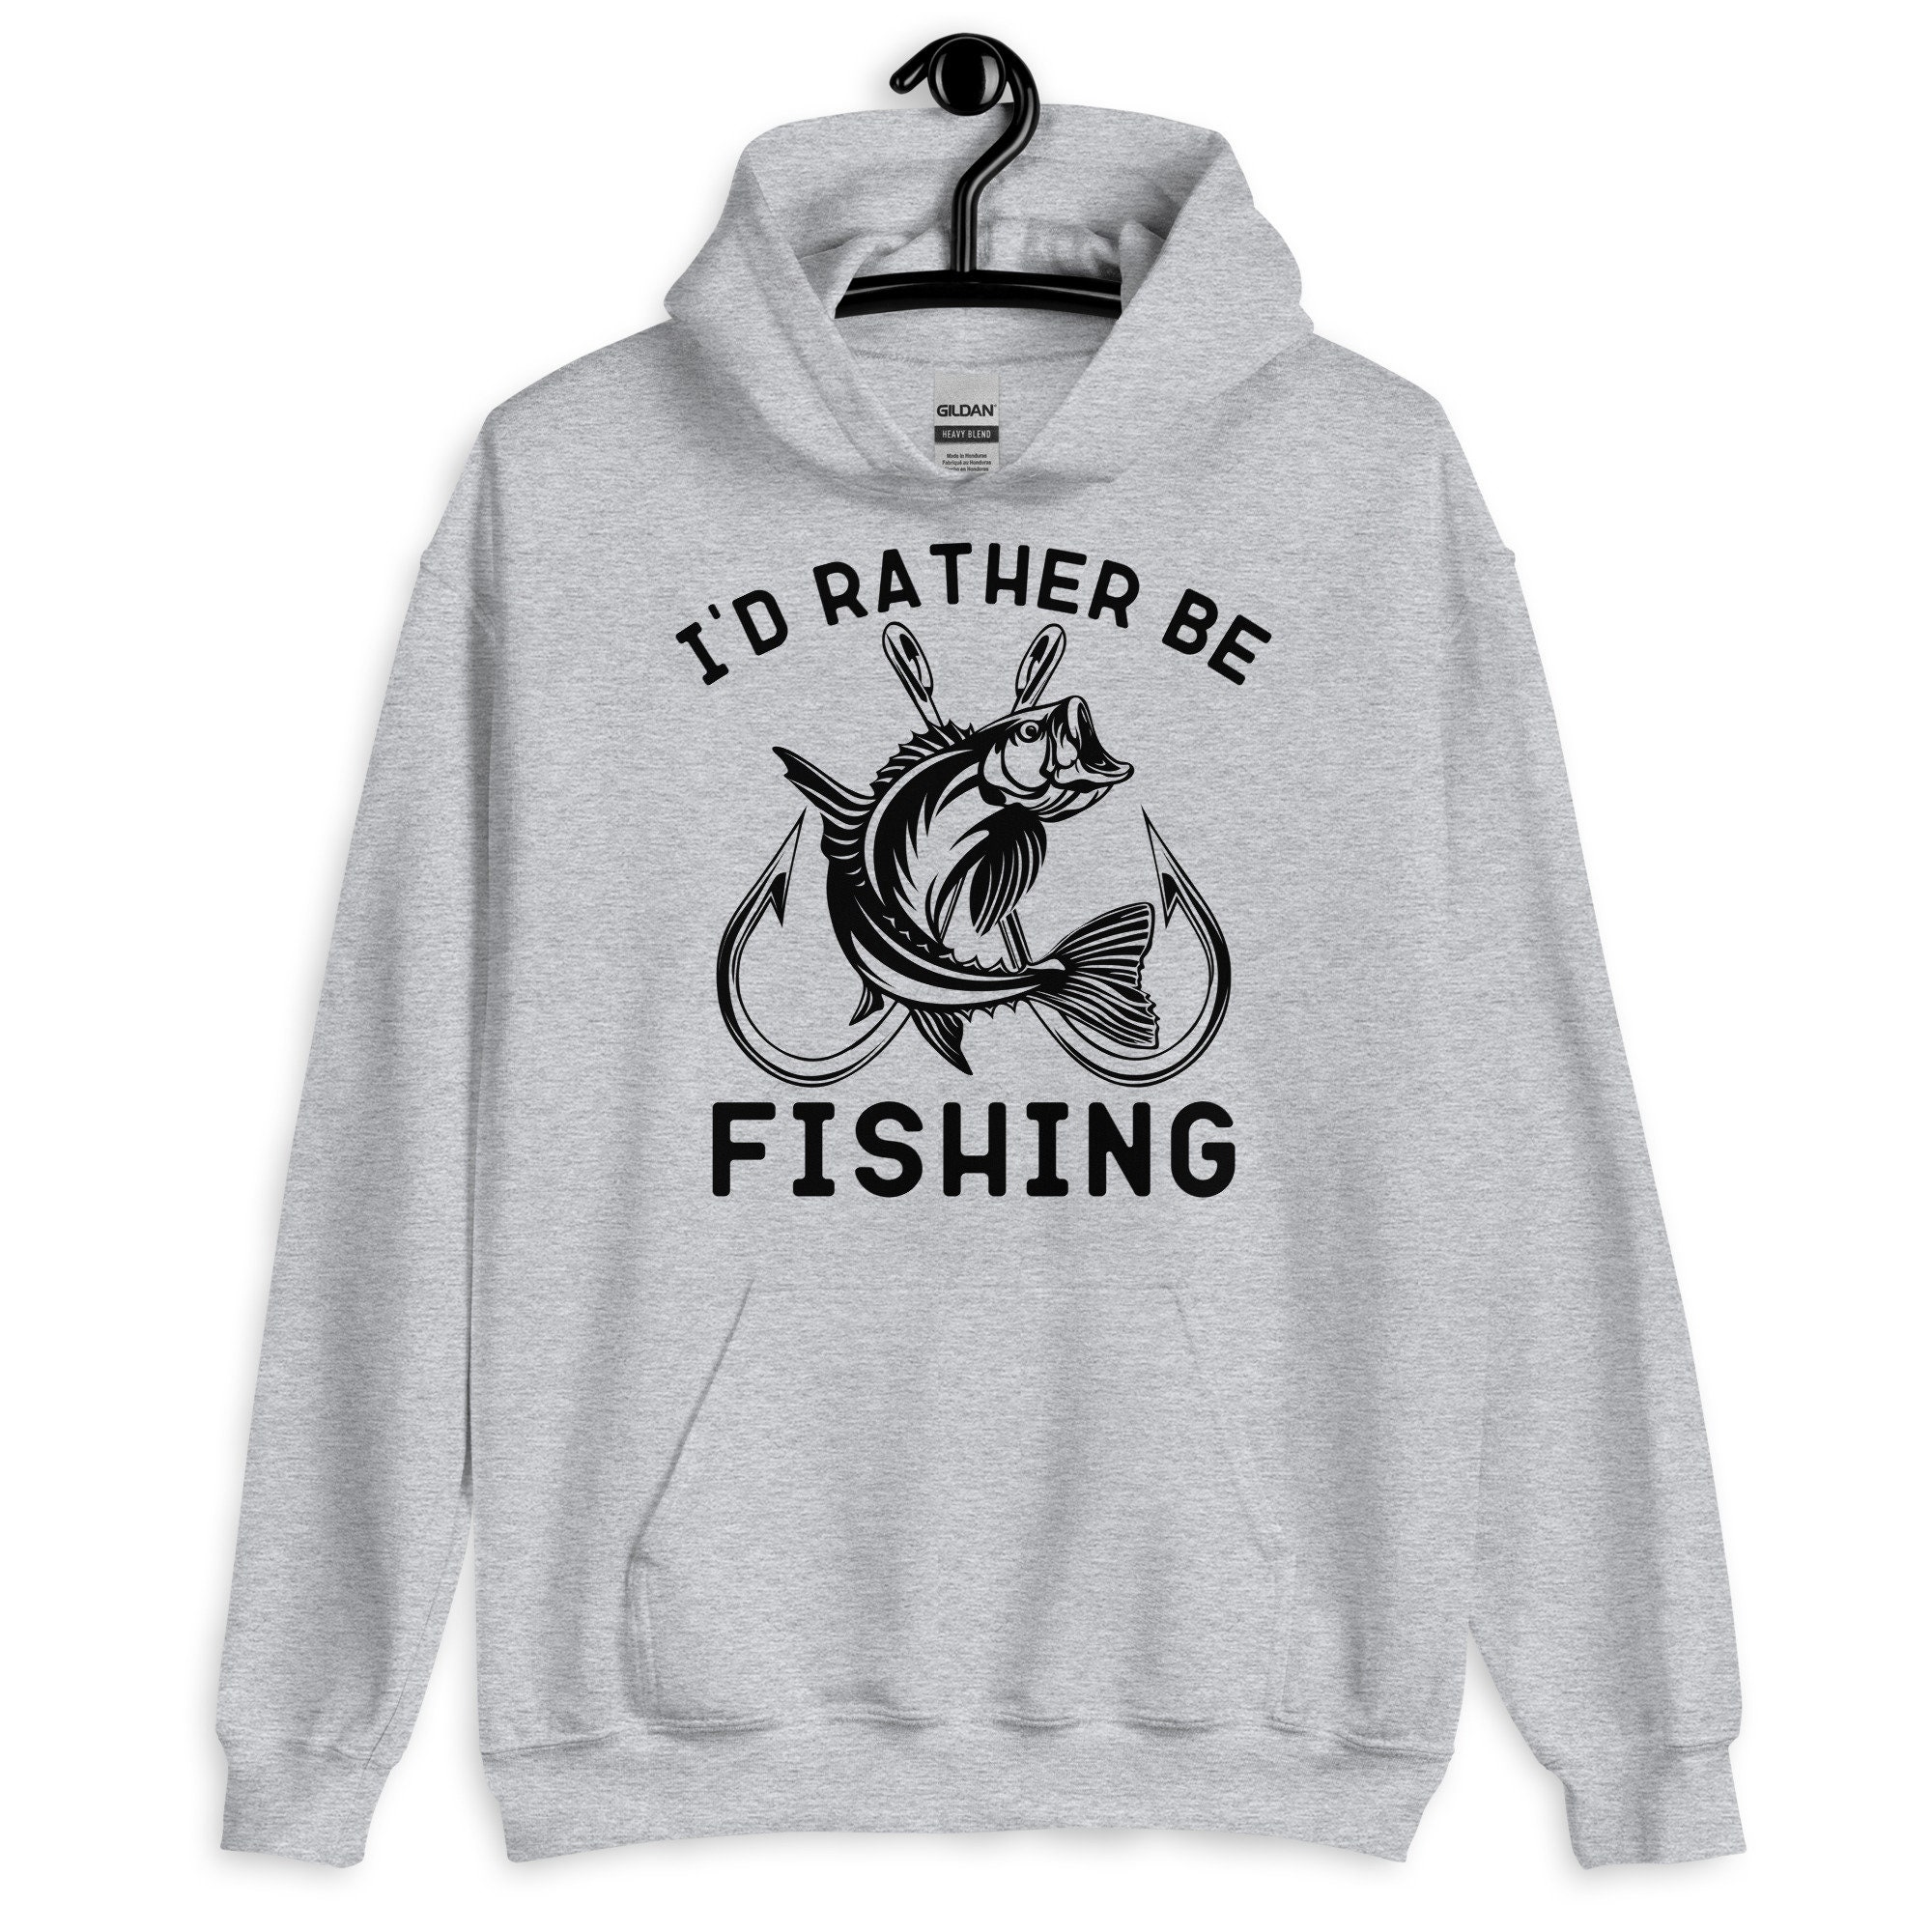 Fishing hoodie, I'd Rather Be Fishing Hoodie, fisherman hoodie, gift for fishing man, gift for fishing lovers